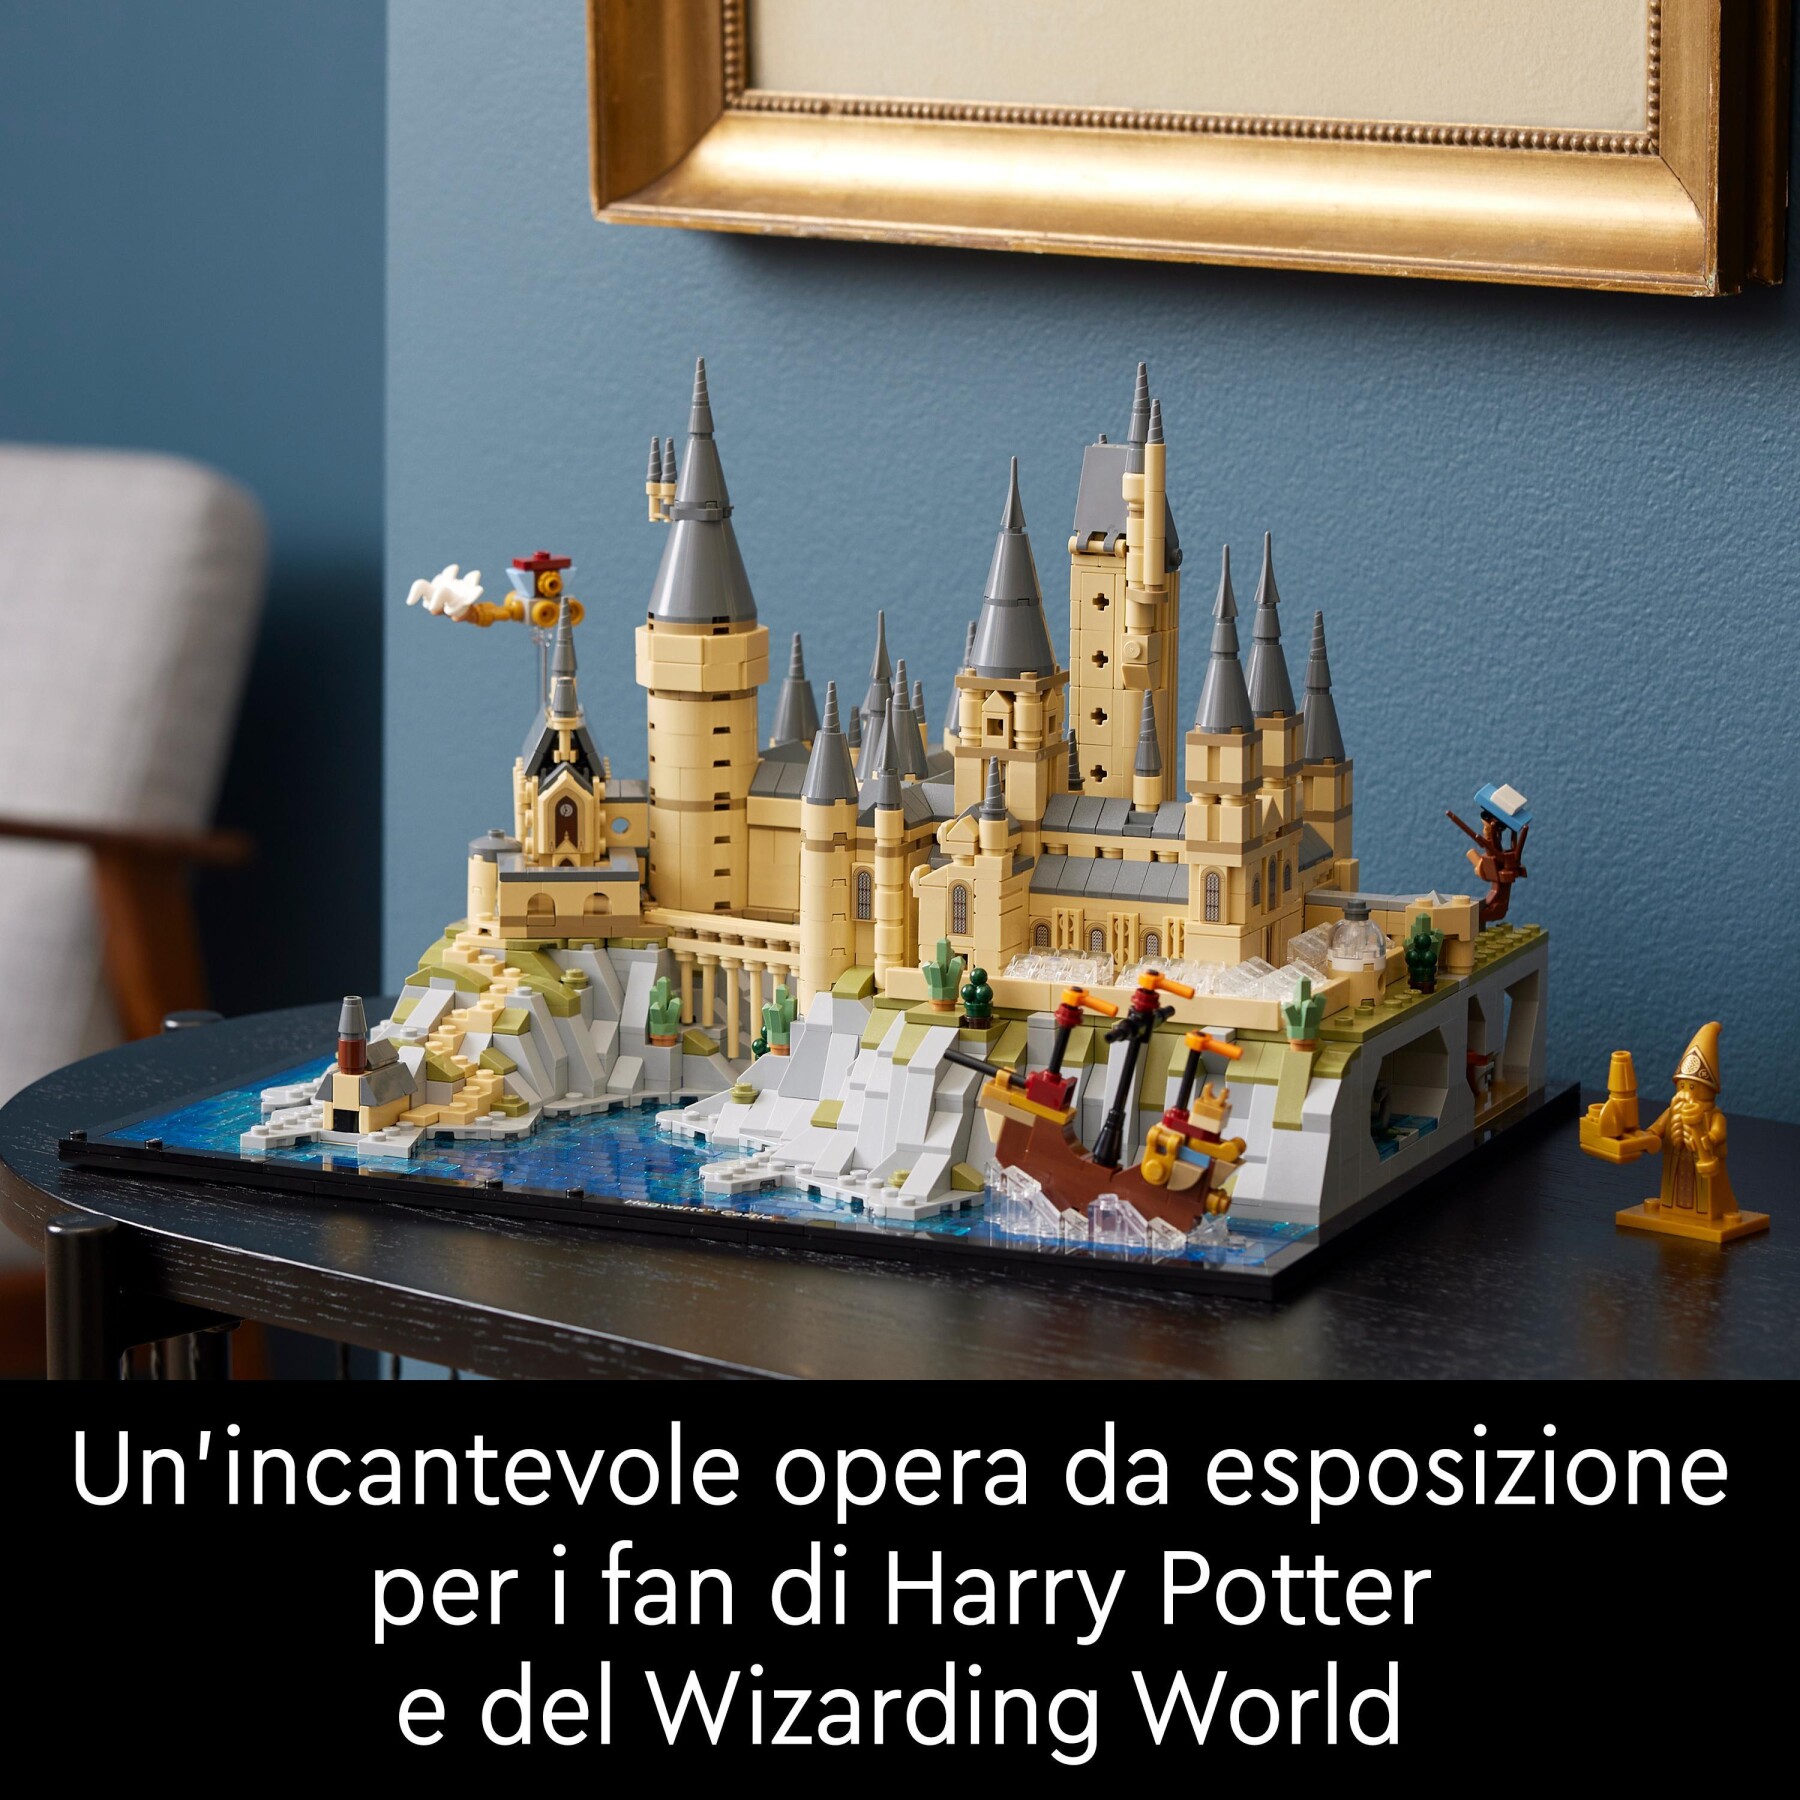 Castello di Hogwarts 71043